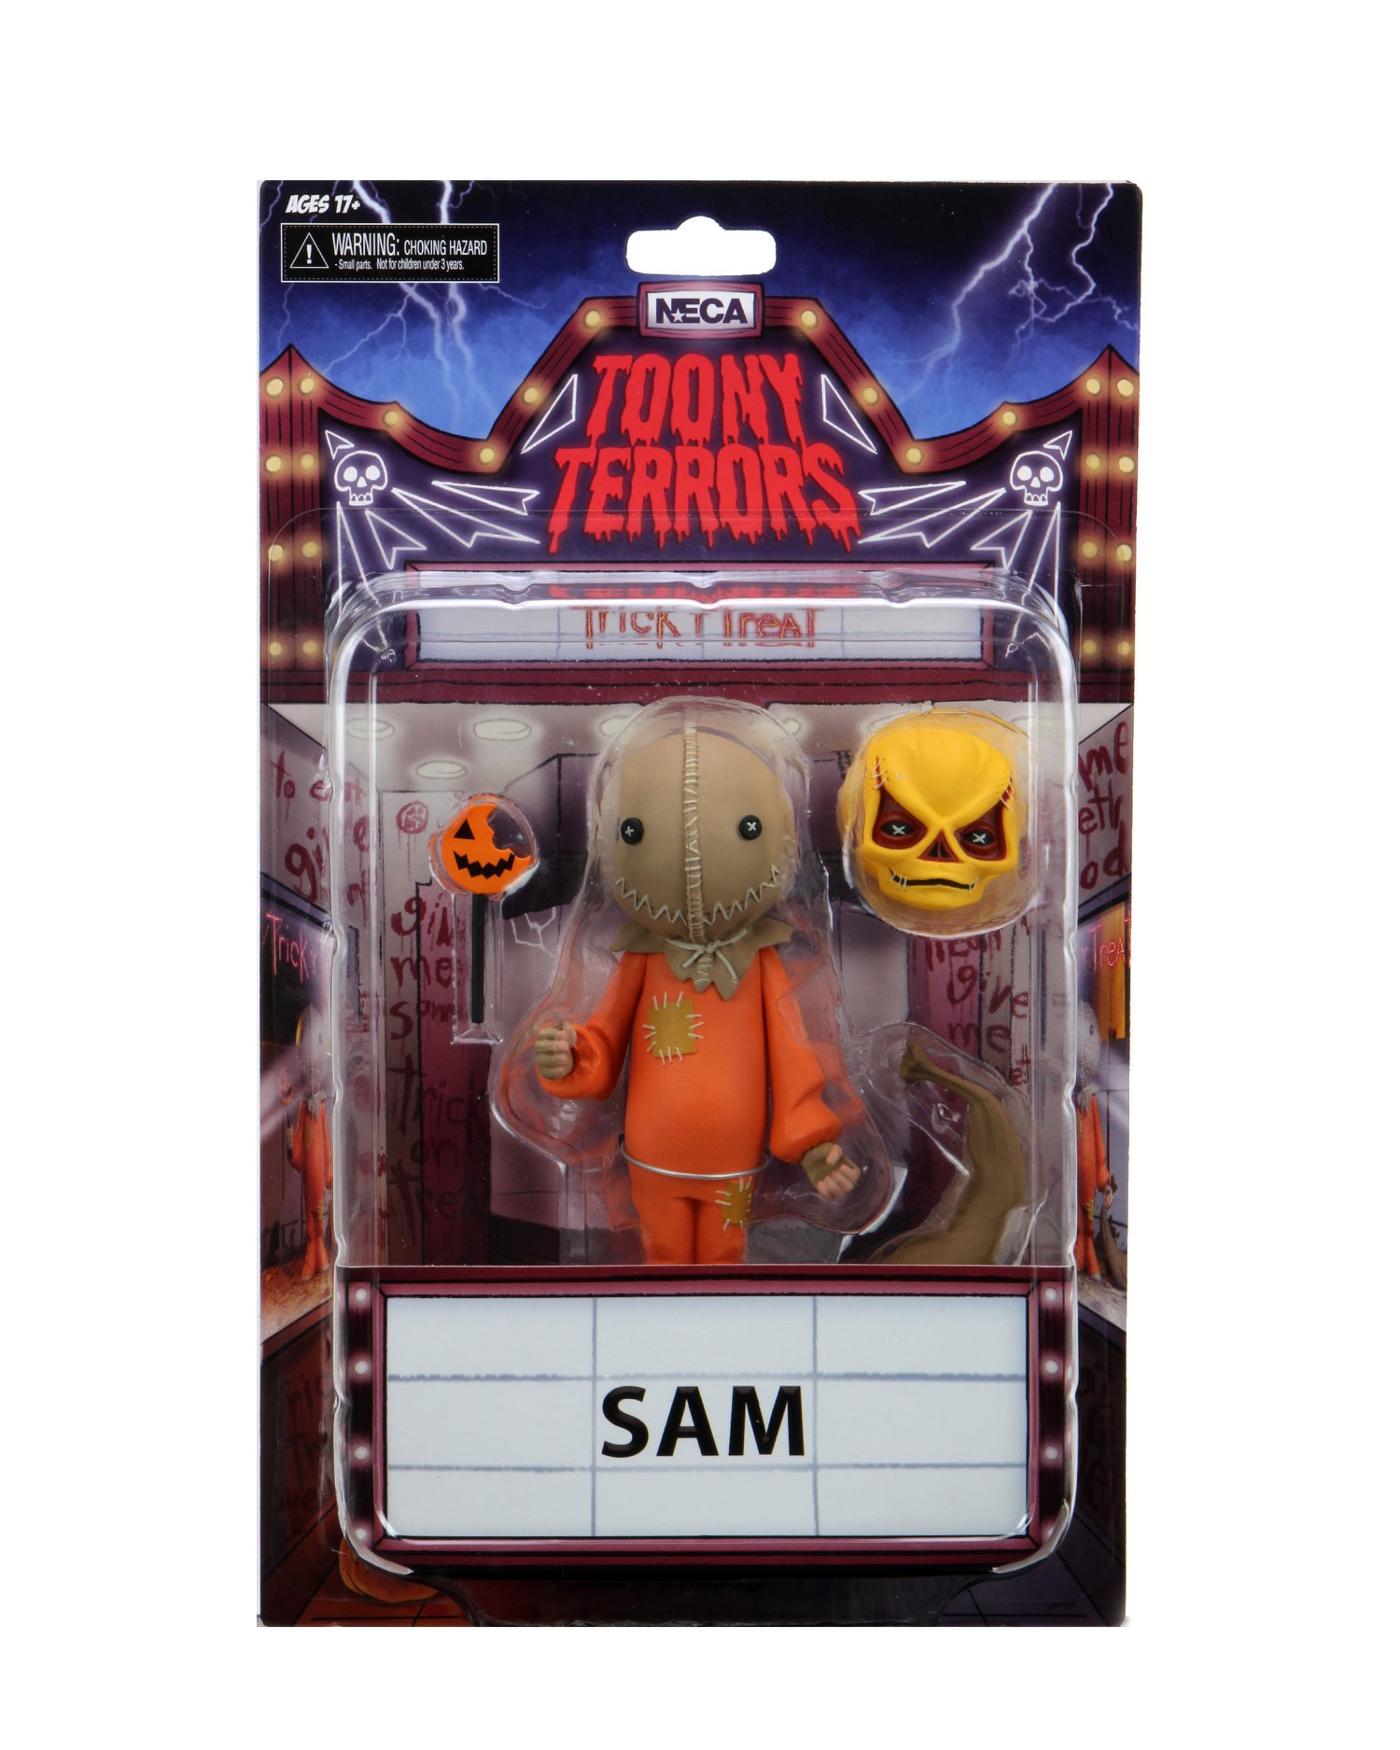 Toony Terrors brings you Sam!